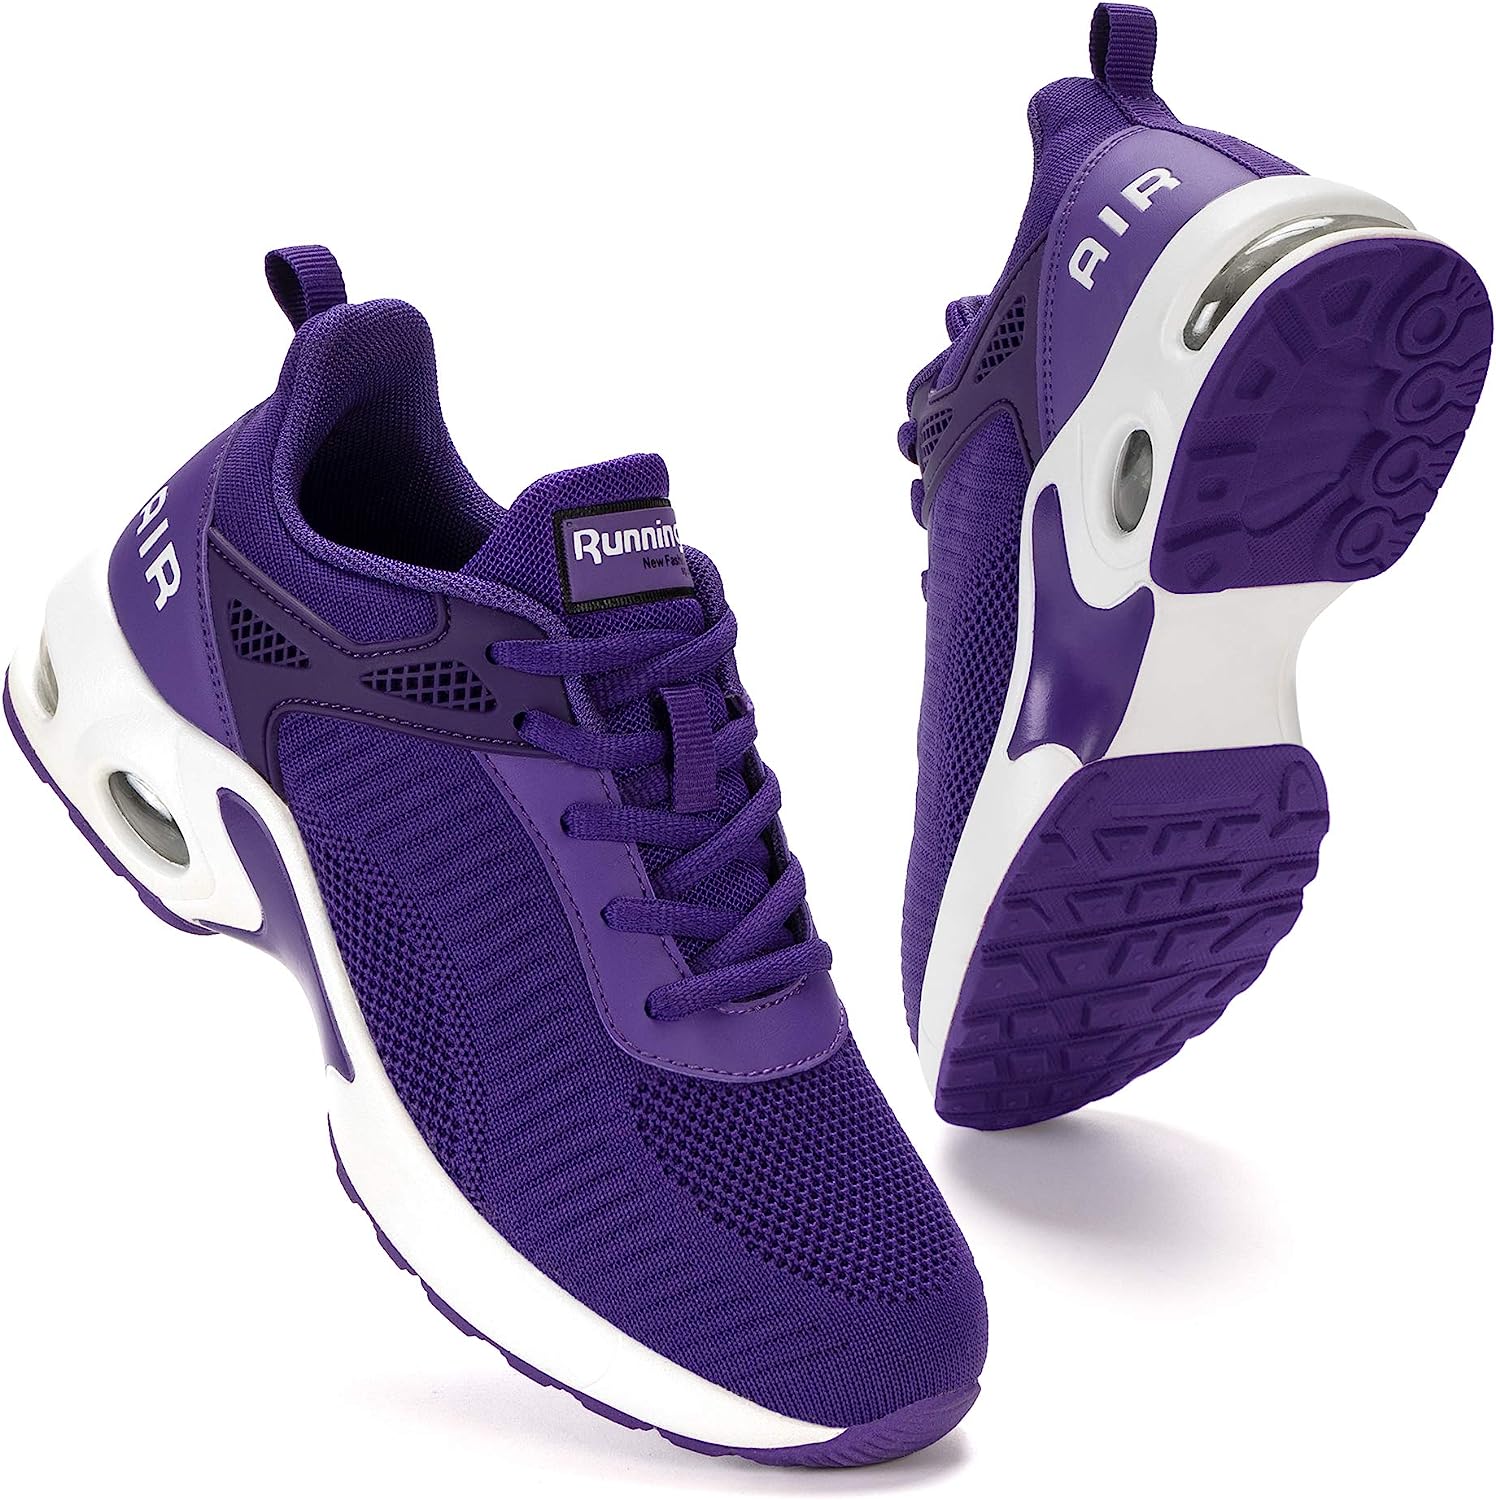 Akk Women Air Shoes Running Sneakers Tennis Walking [...]